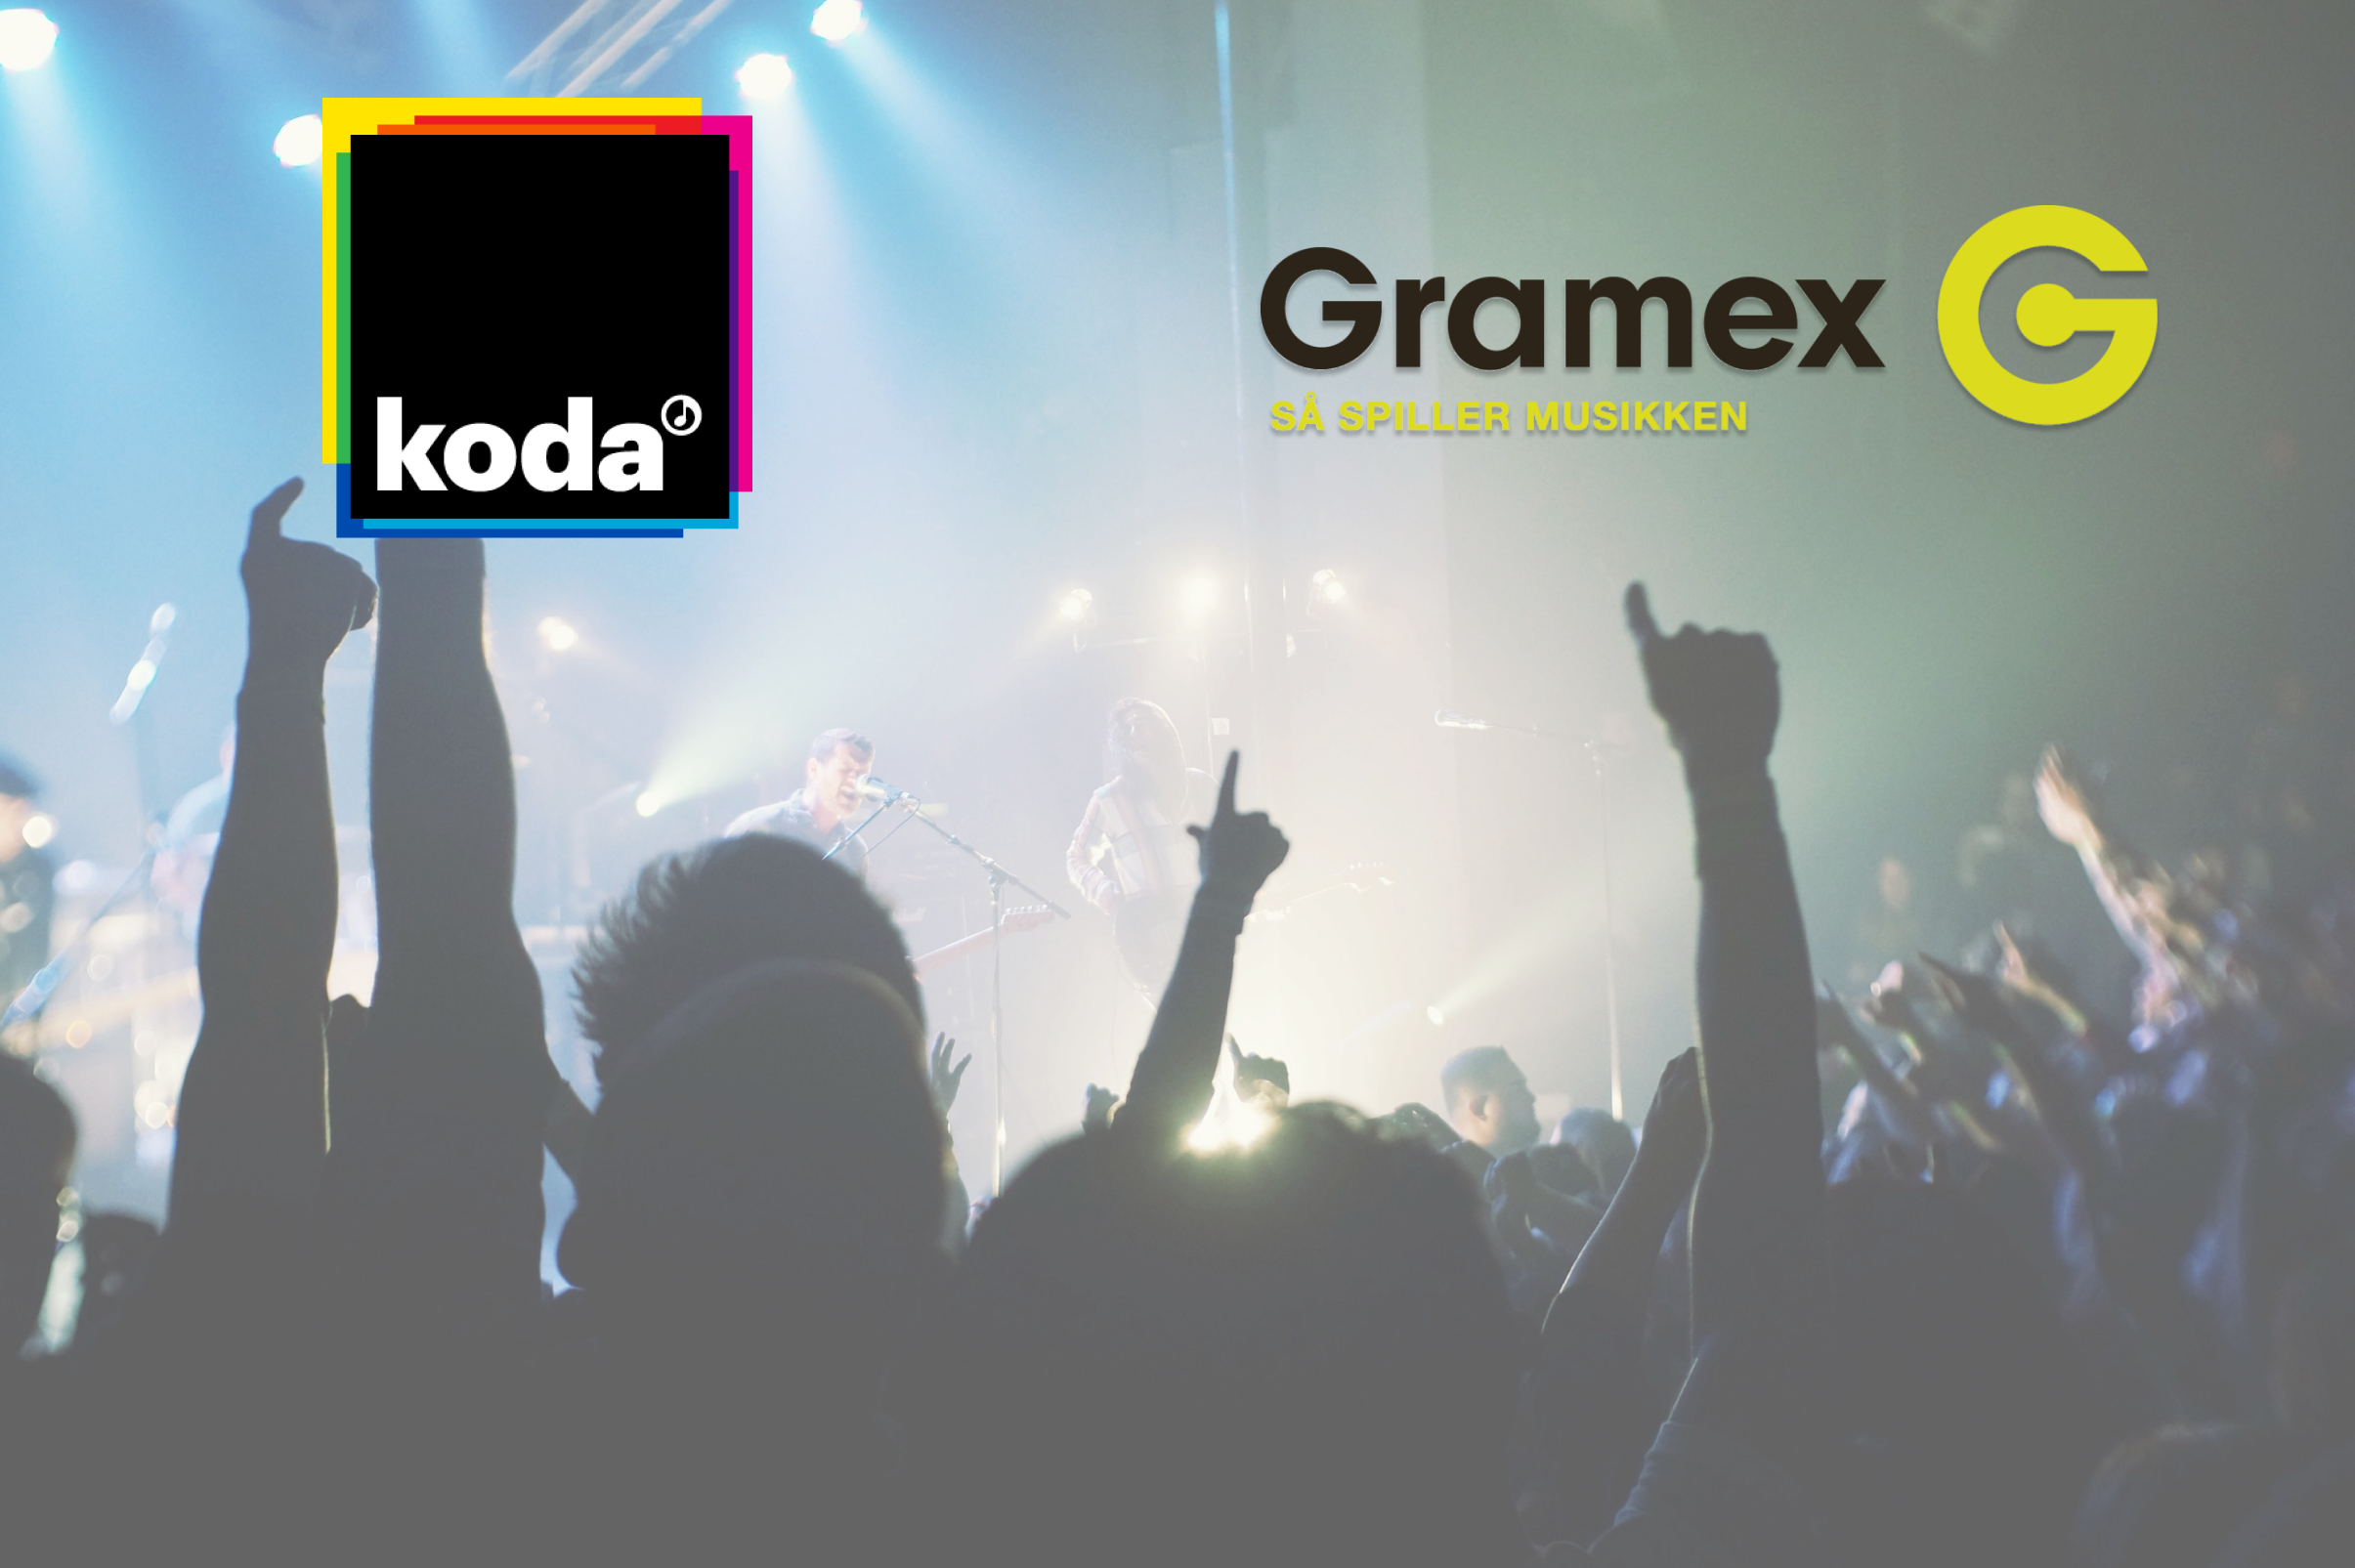 Koda/gramex logo